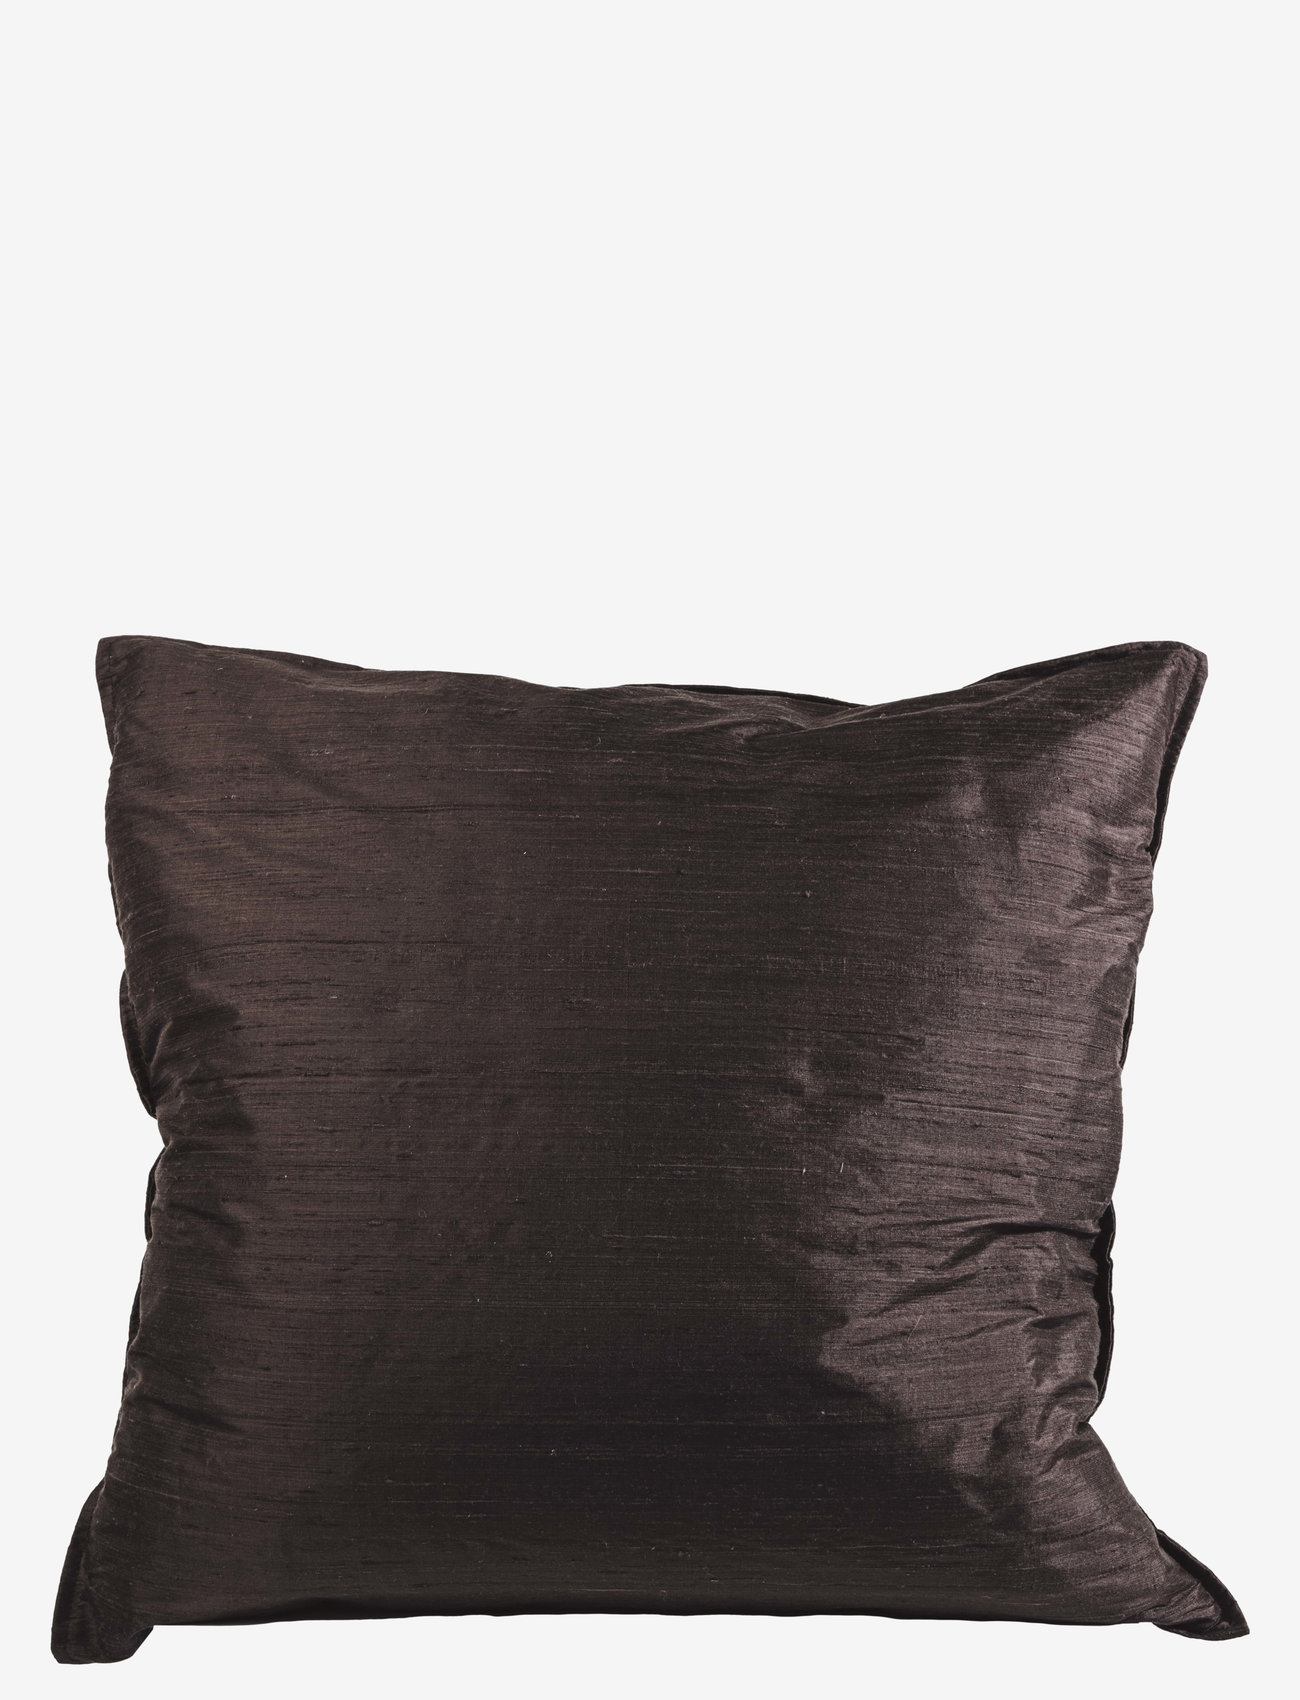 DAY Home - Day Seat silk cushion cover - dekoratīvas spilvendrānas - bean - 0